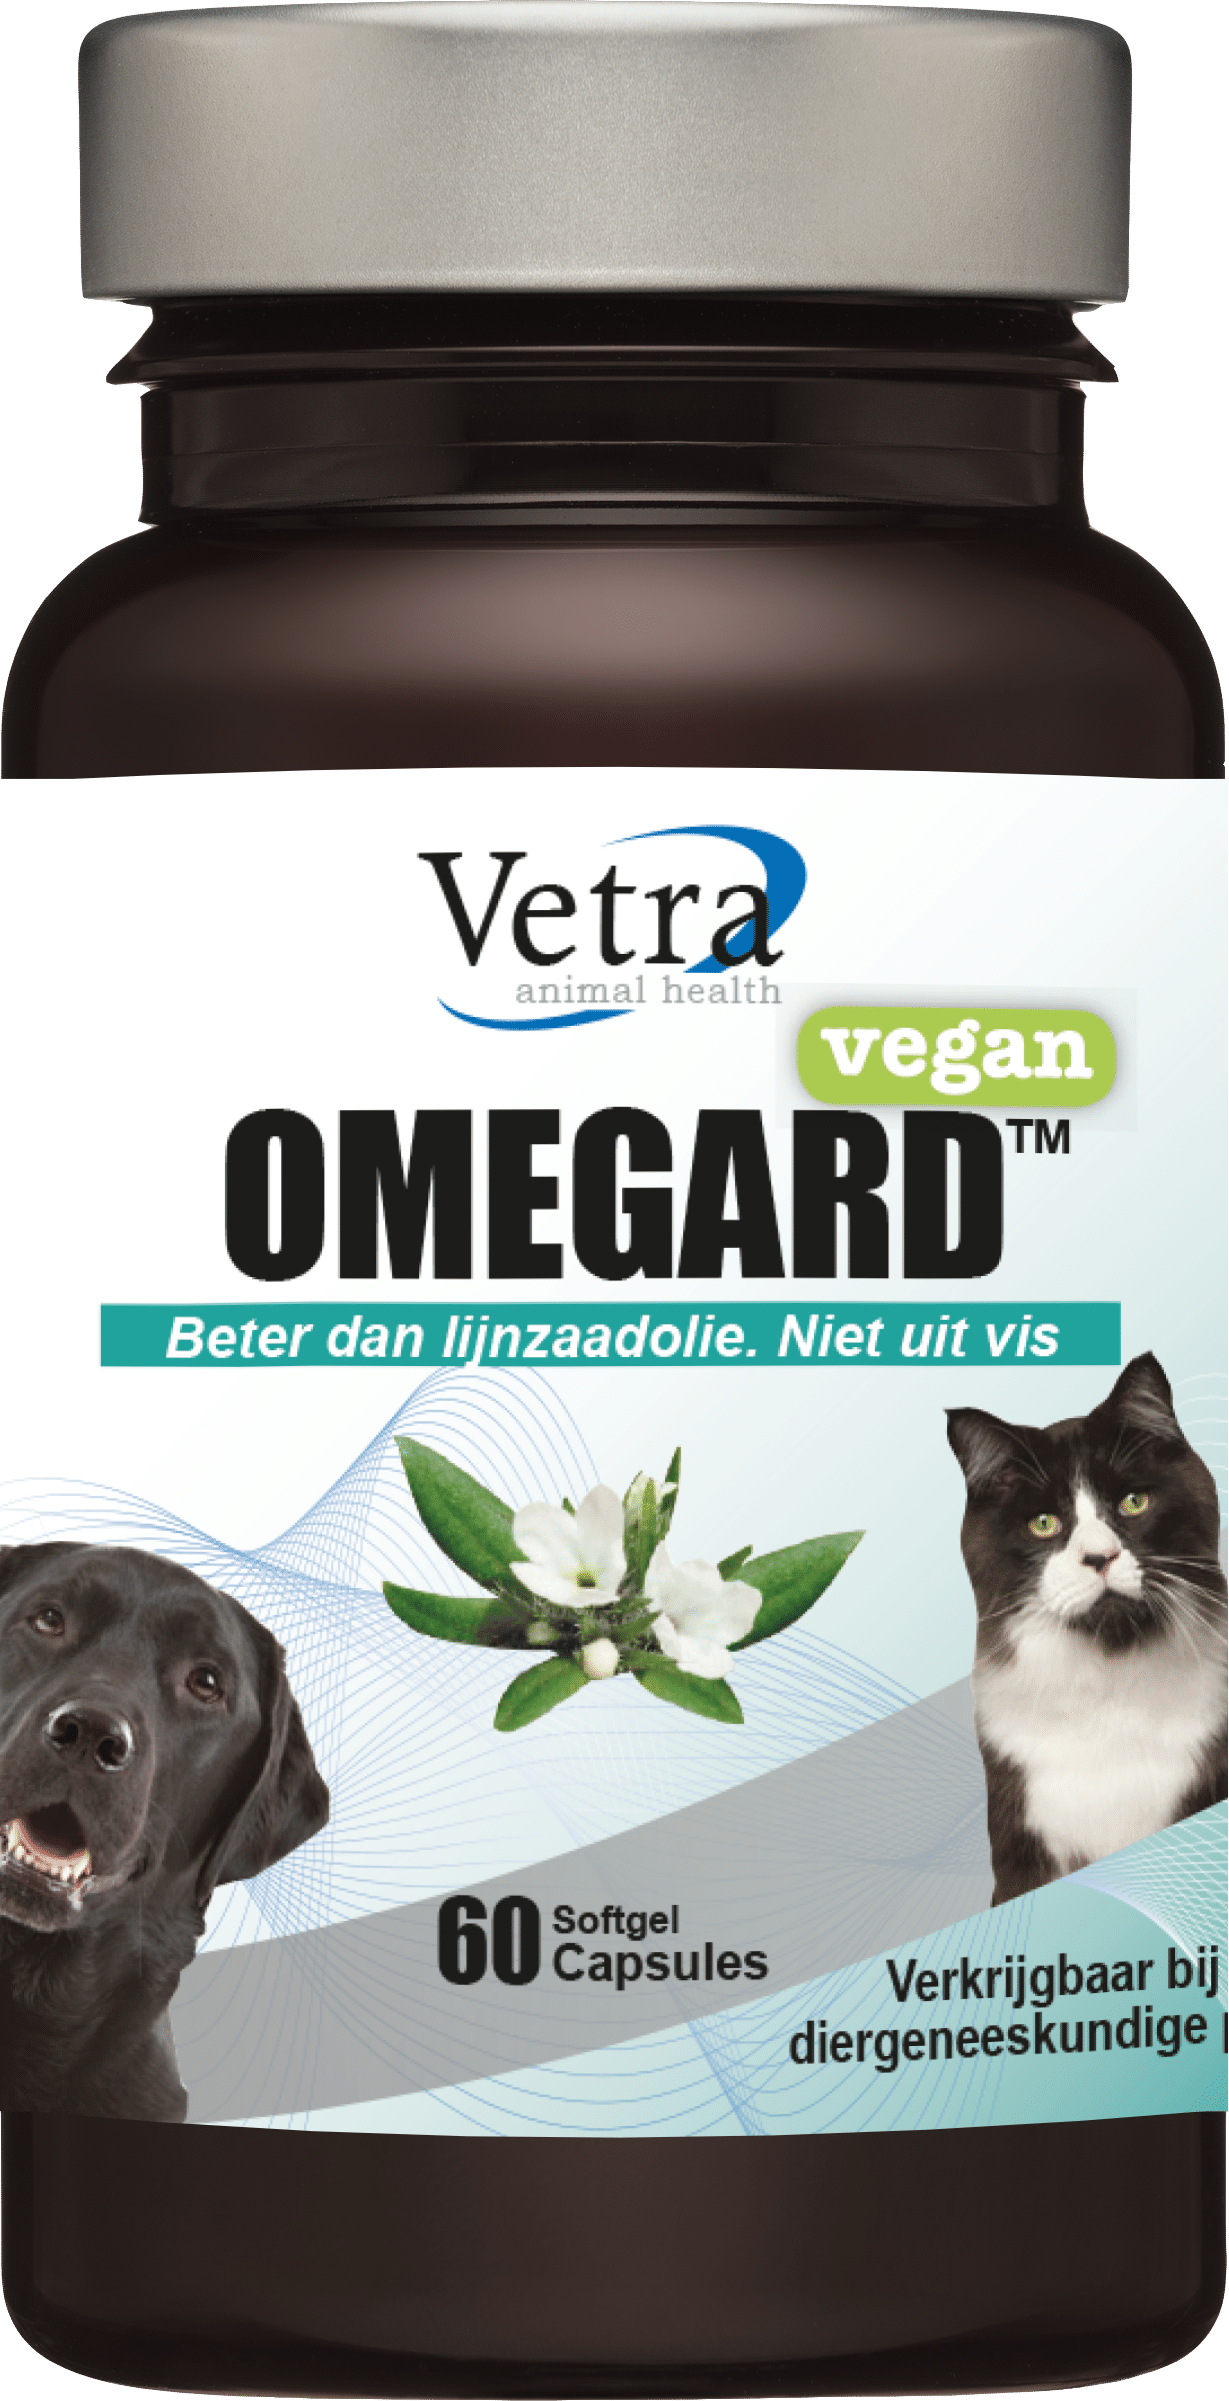 OmeGard Vegan-1